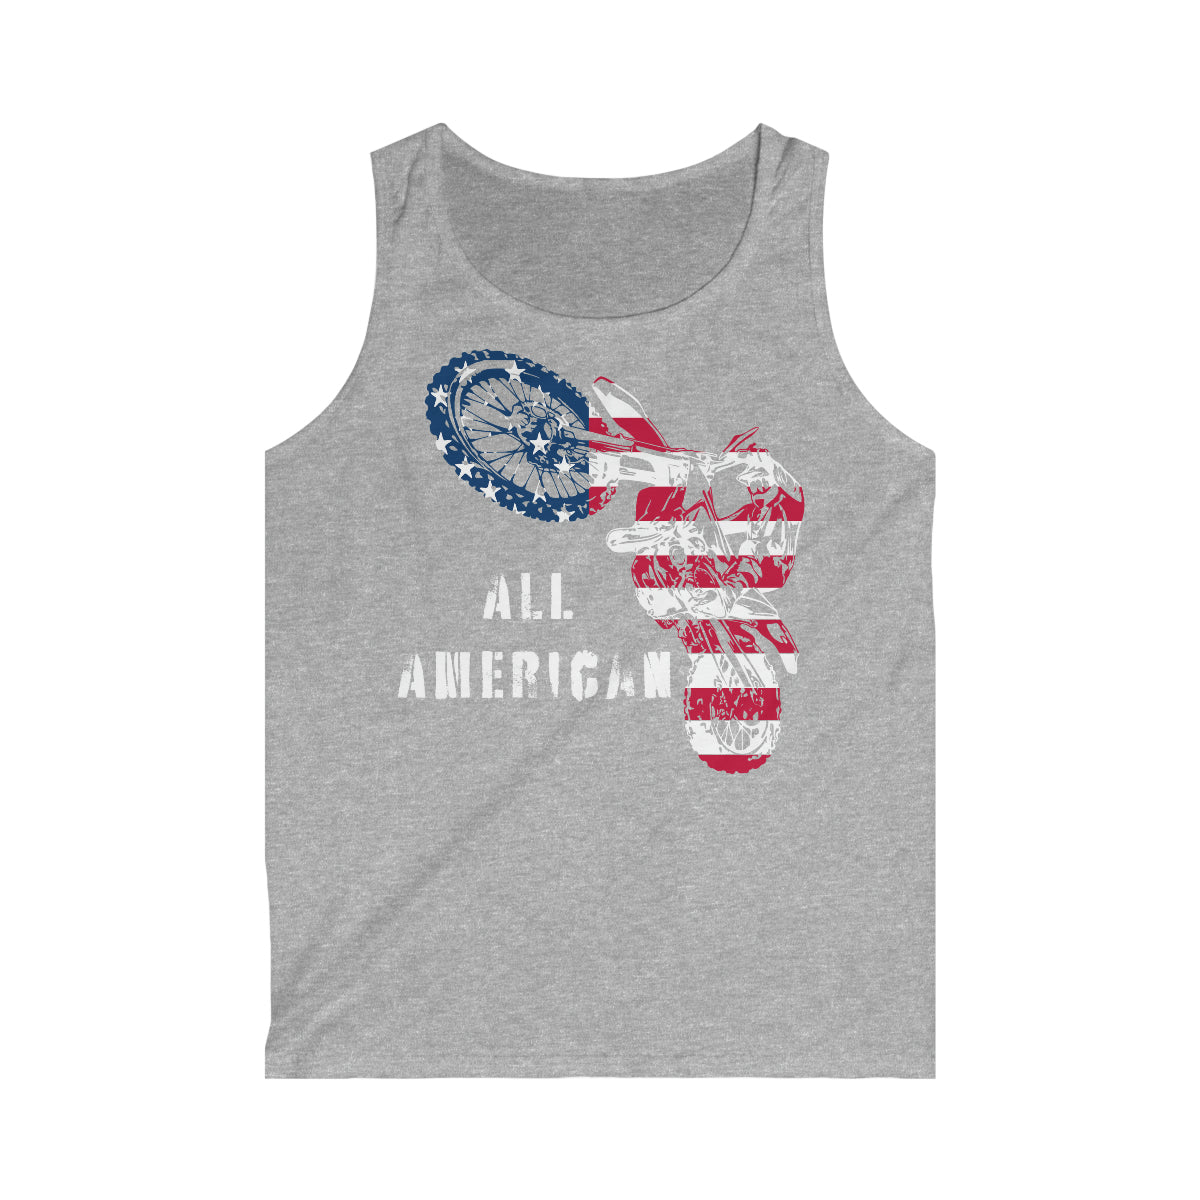 "All American" Tank